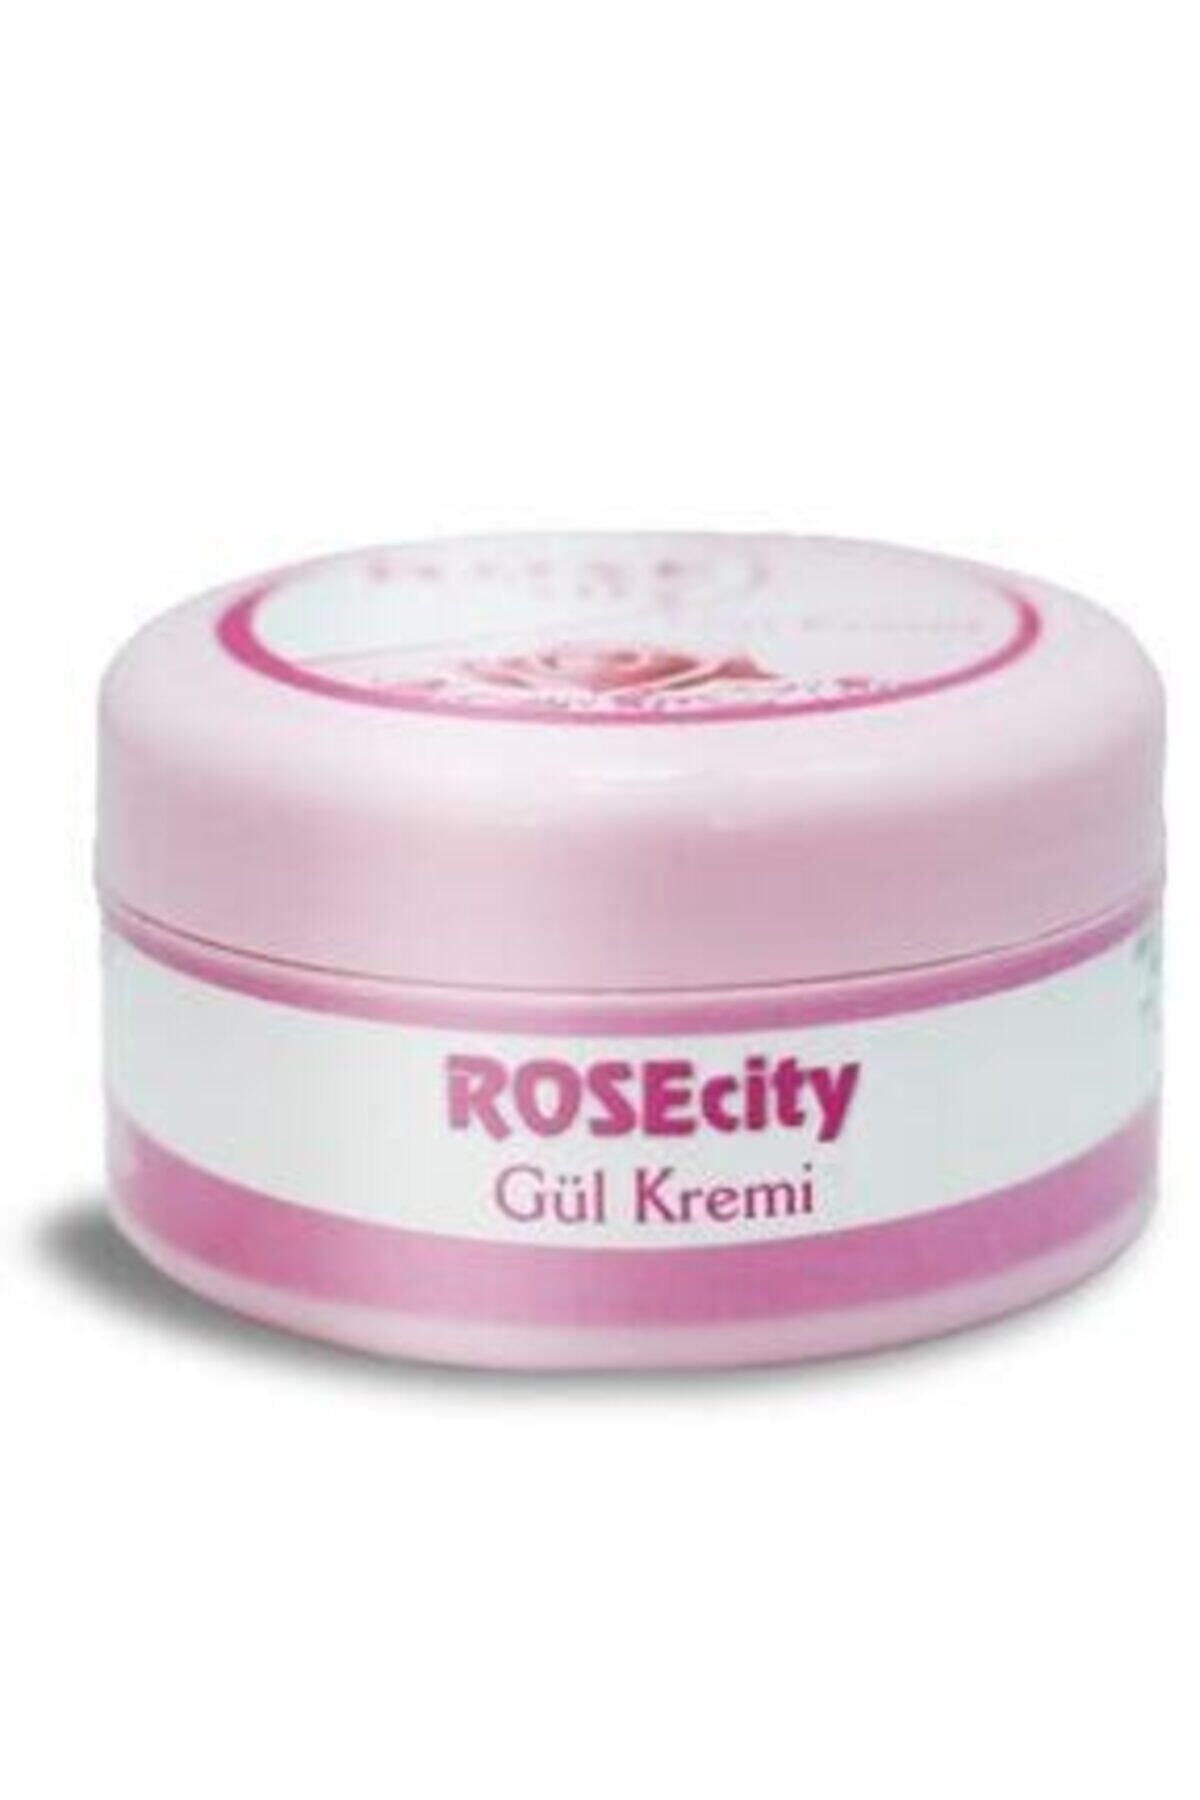 rosecity Gül Kremi Klasik 85 ml